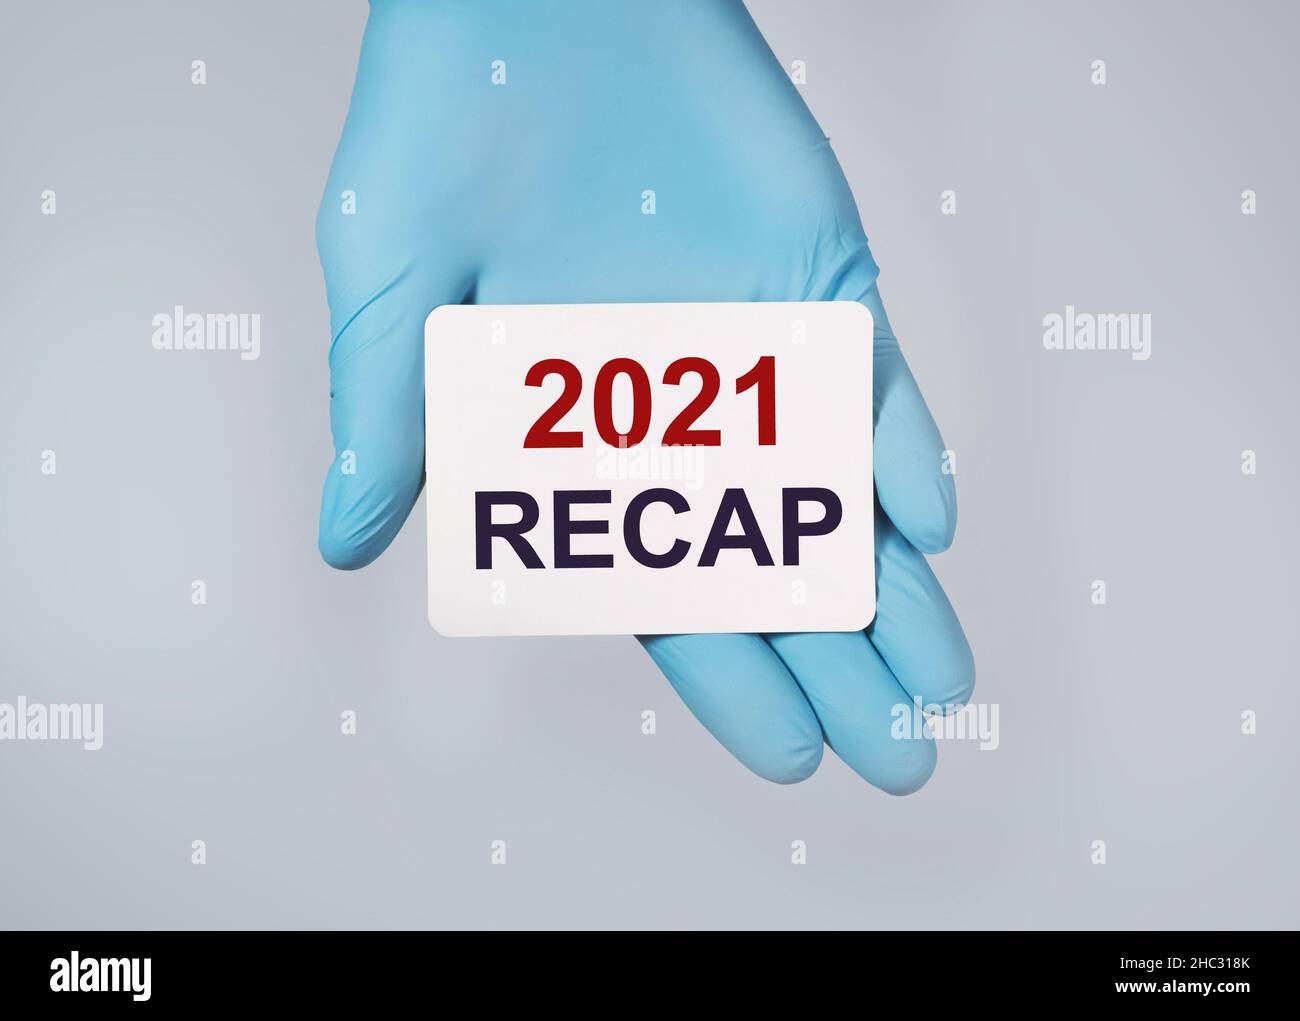 2021 recap, medical health review concept in hands. Stock Photo